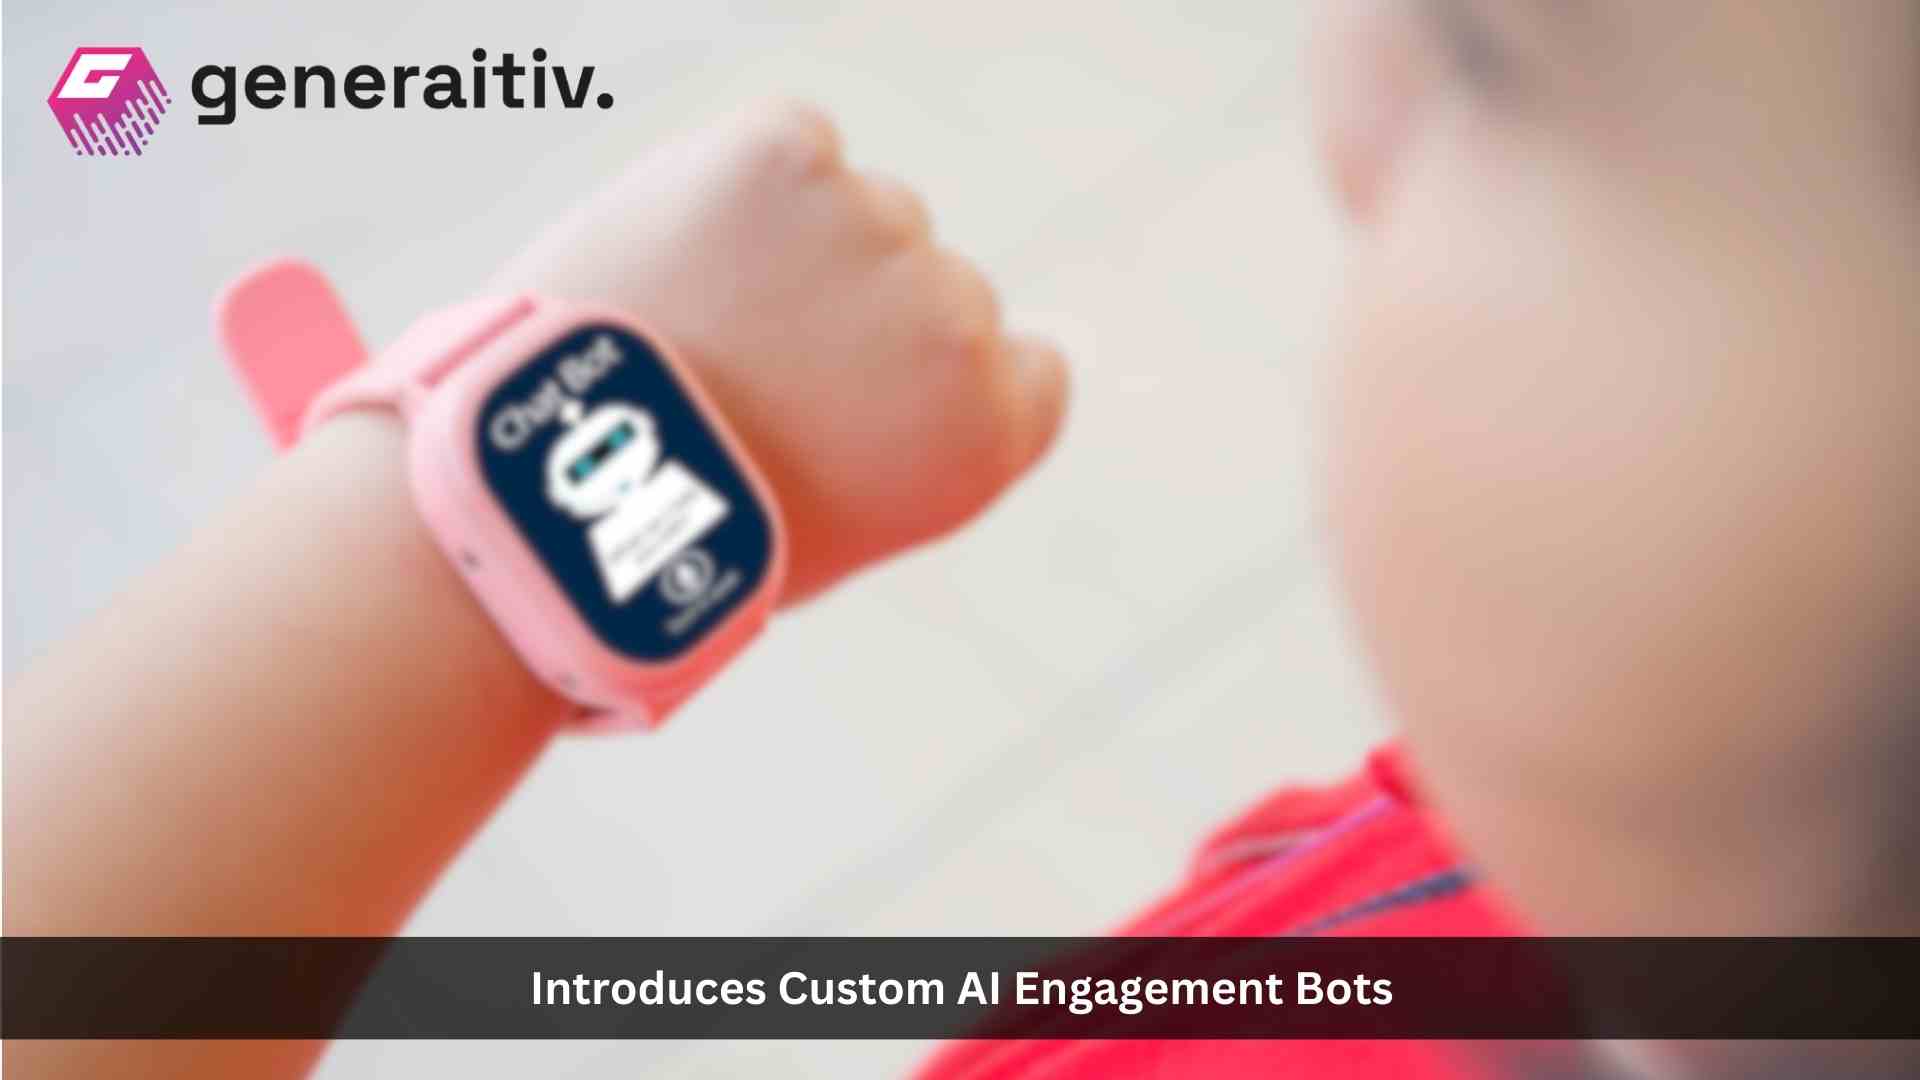 Generaitiv Introduces Custom AI Engagement Bots to Empower Digital Communities Everywhere